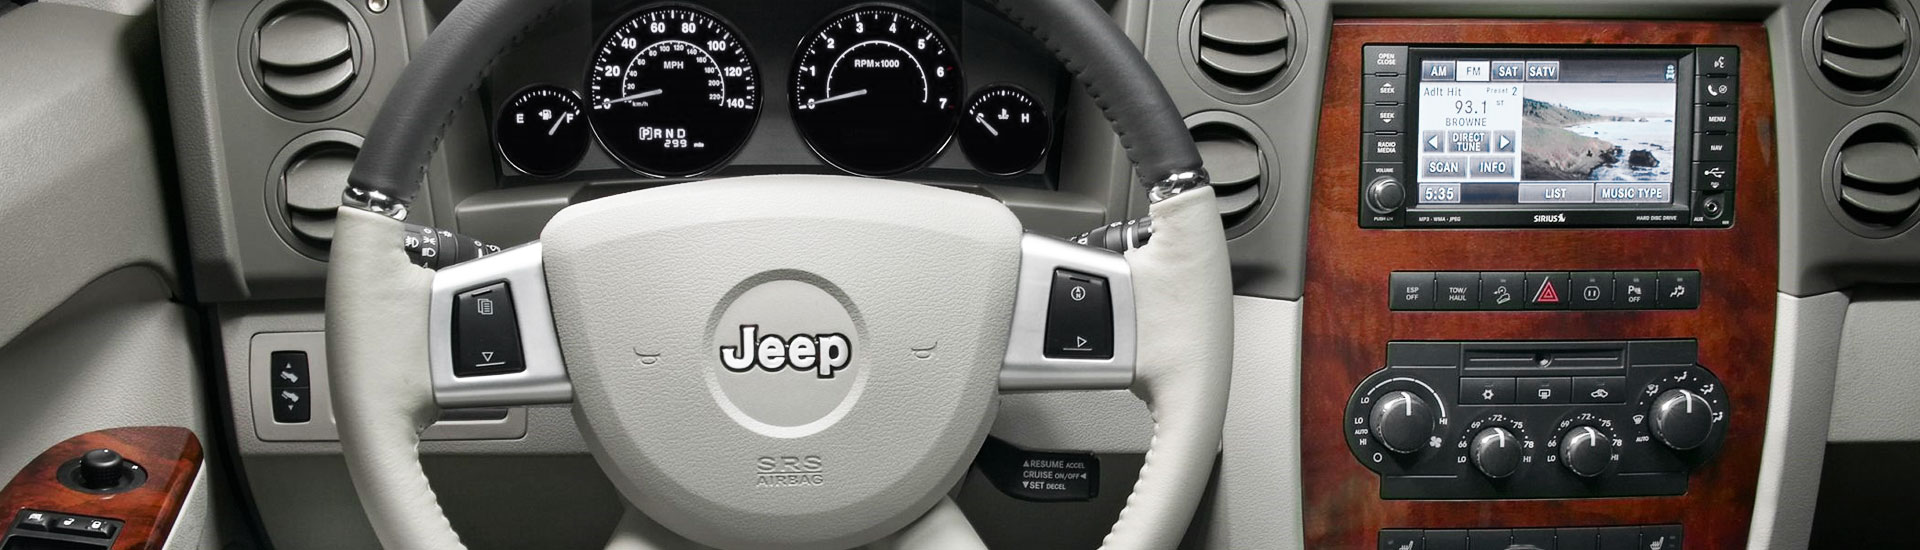 2008 Jeep Patriot Custom Dash Kits